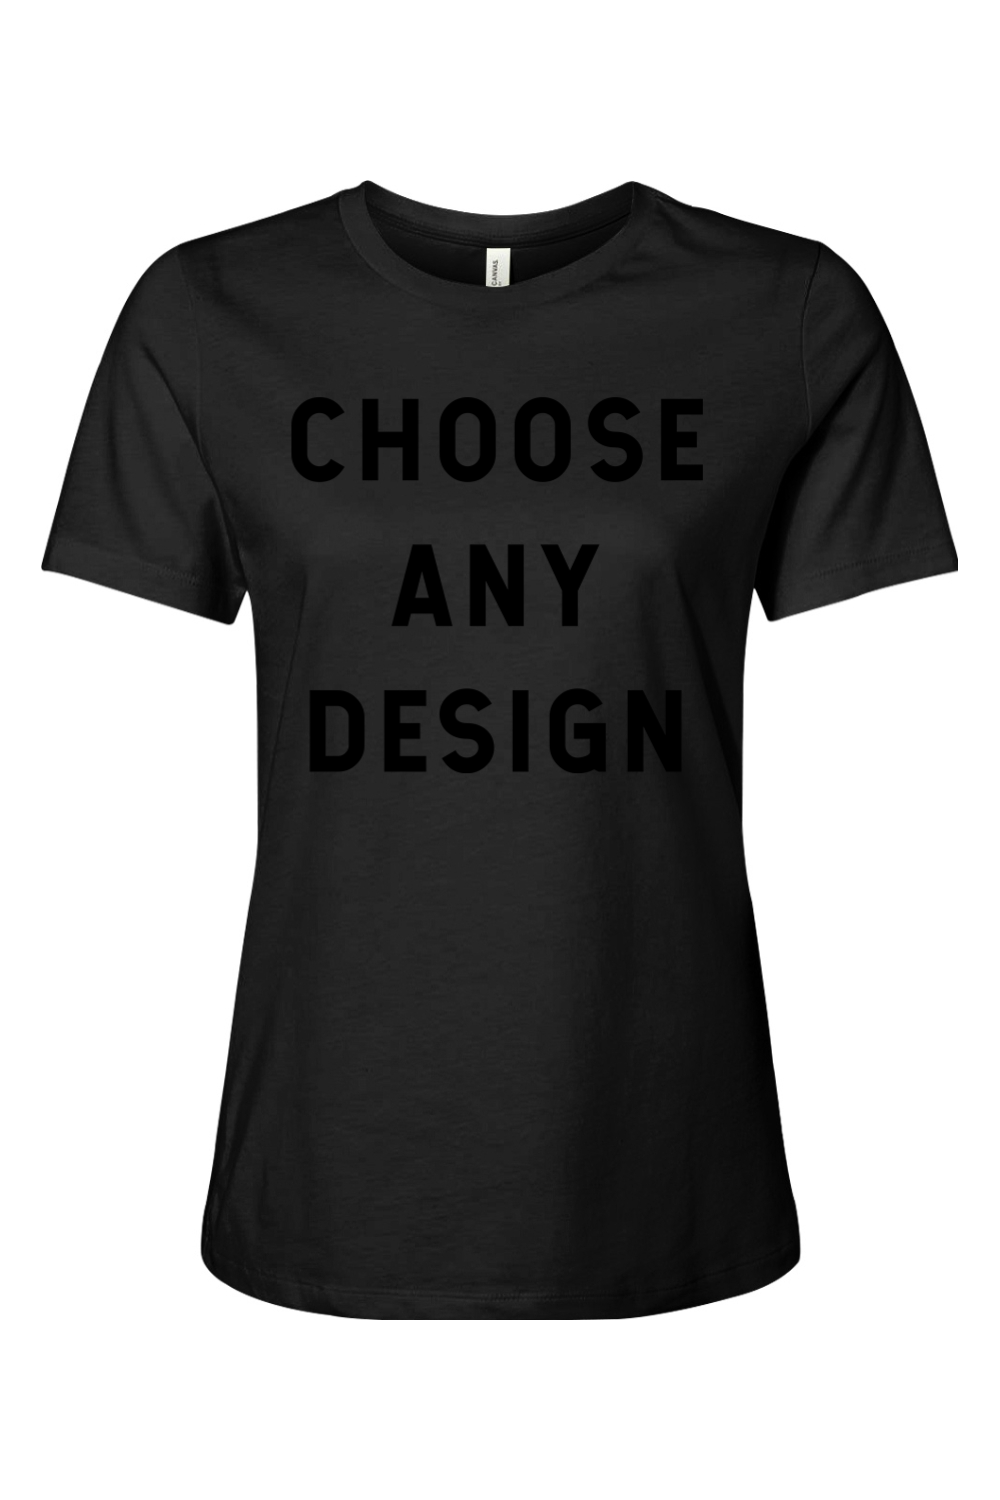 Choose Any Design - Ladies Tee - Yinzylvania